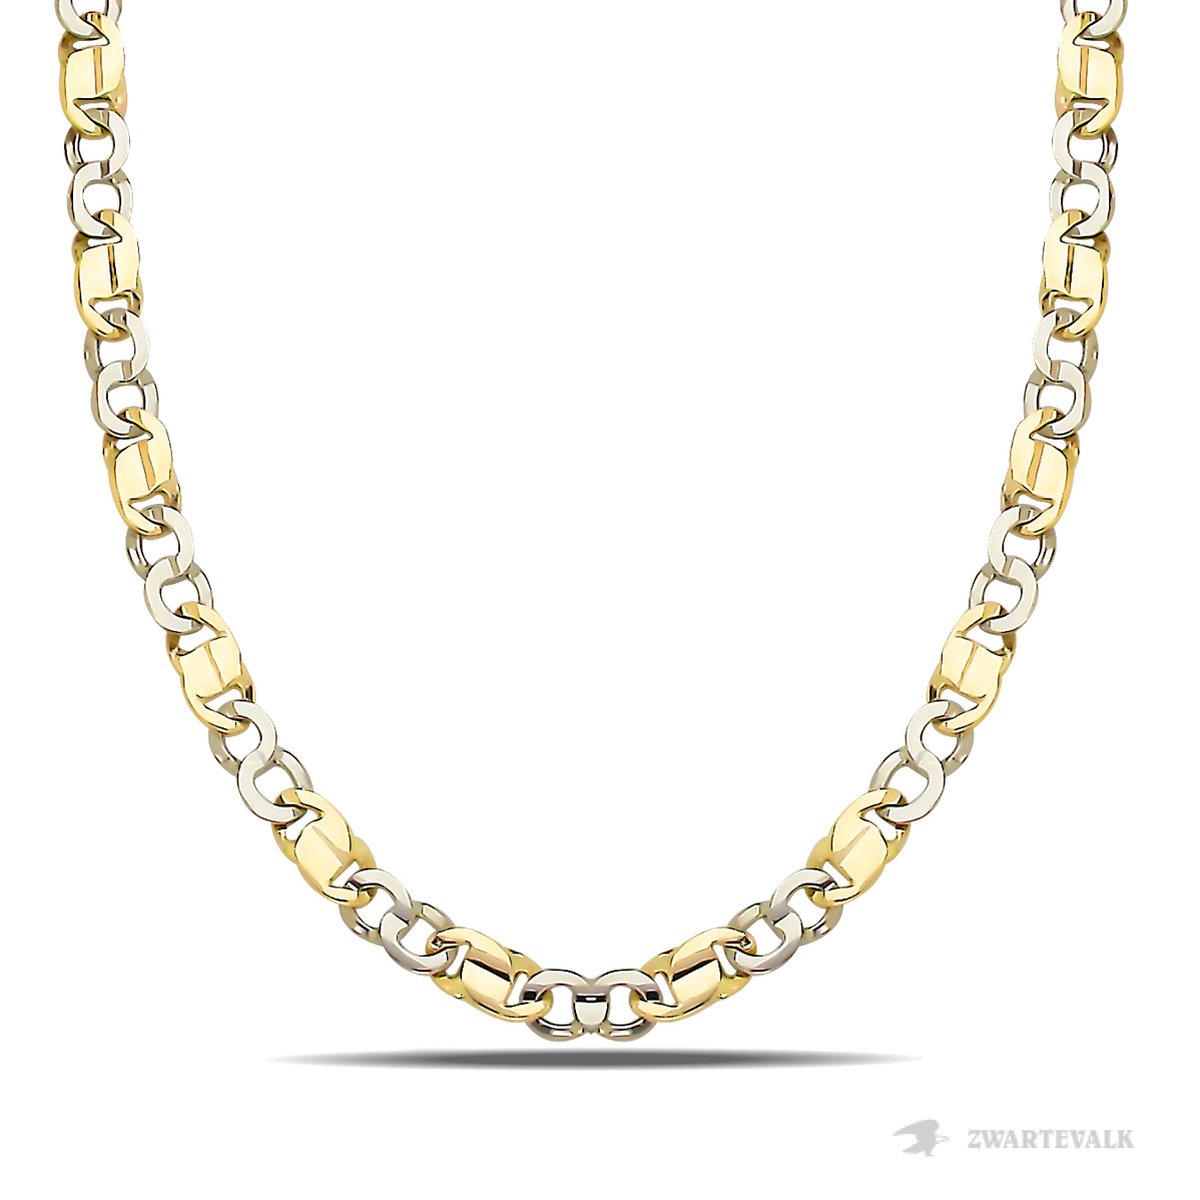 Juwelier Zwartevalk 14 karaat gouden bicolor ketting - BF 871/50cm